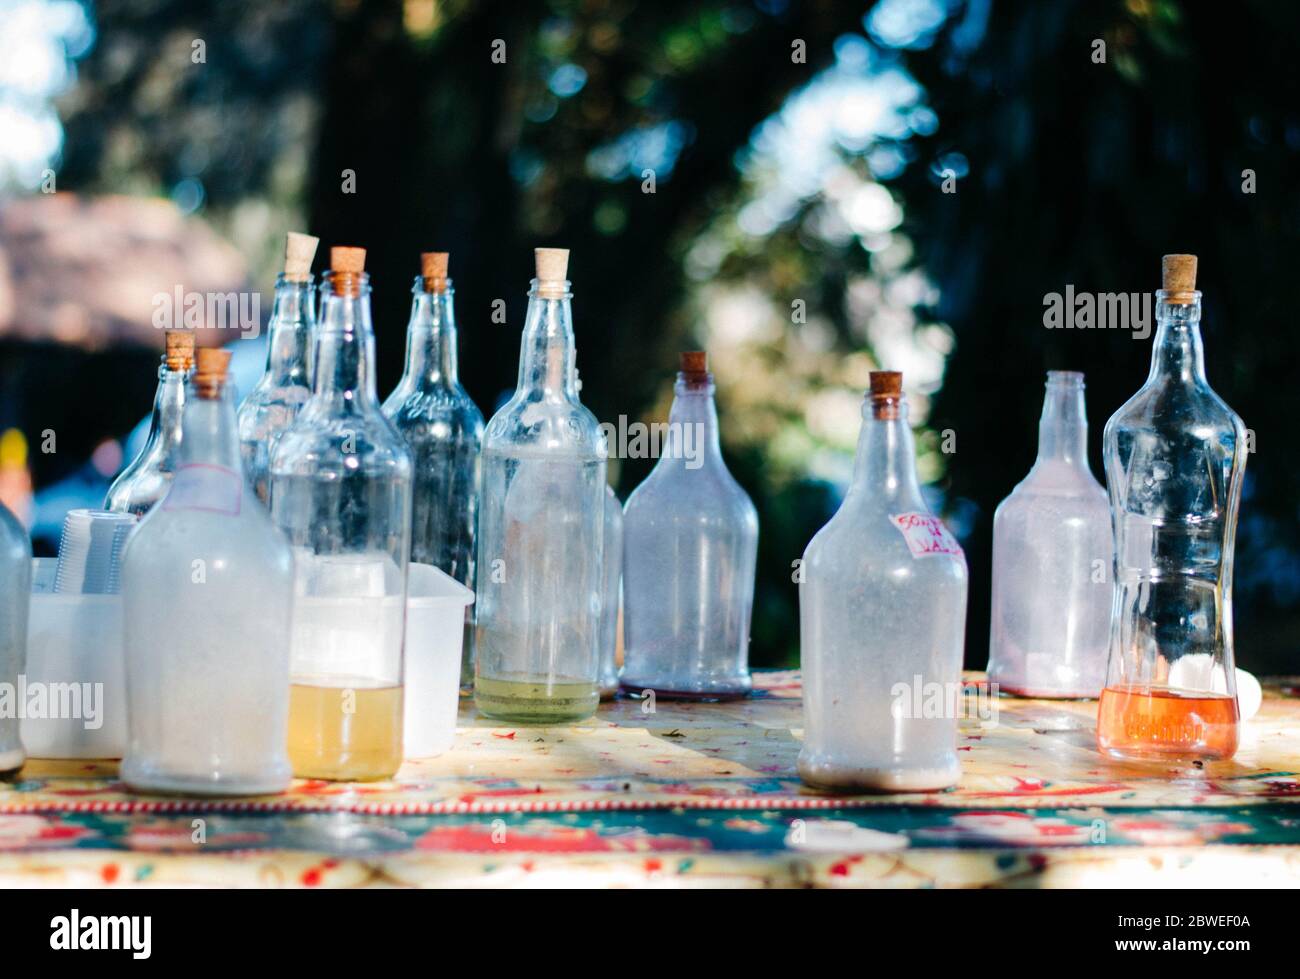 Botellas de licor vacias fotografías e imágenes de alta resolución - Alamy